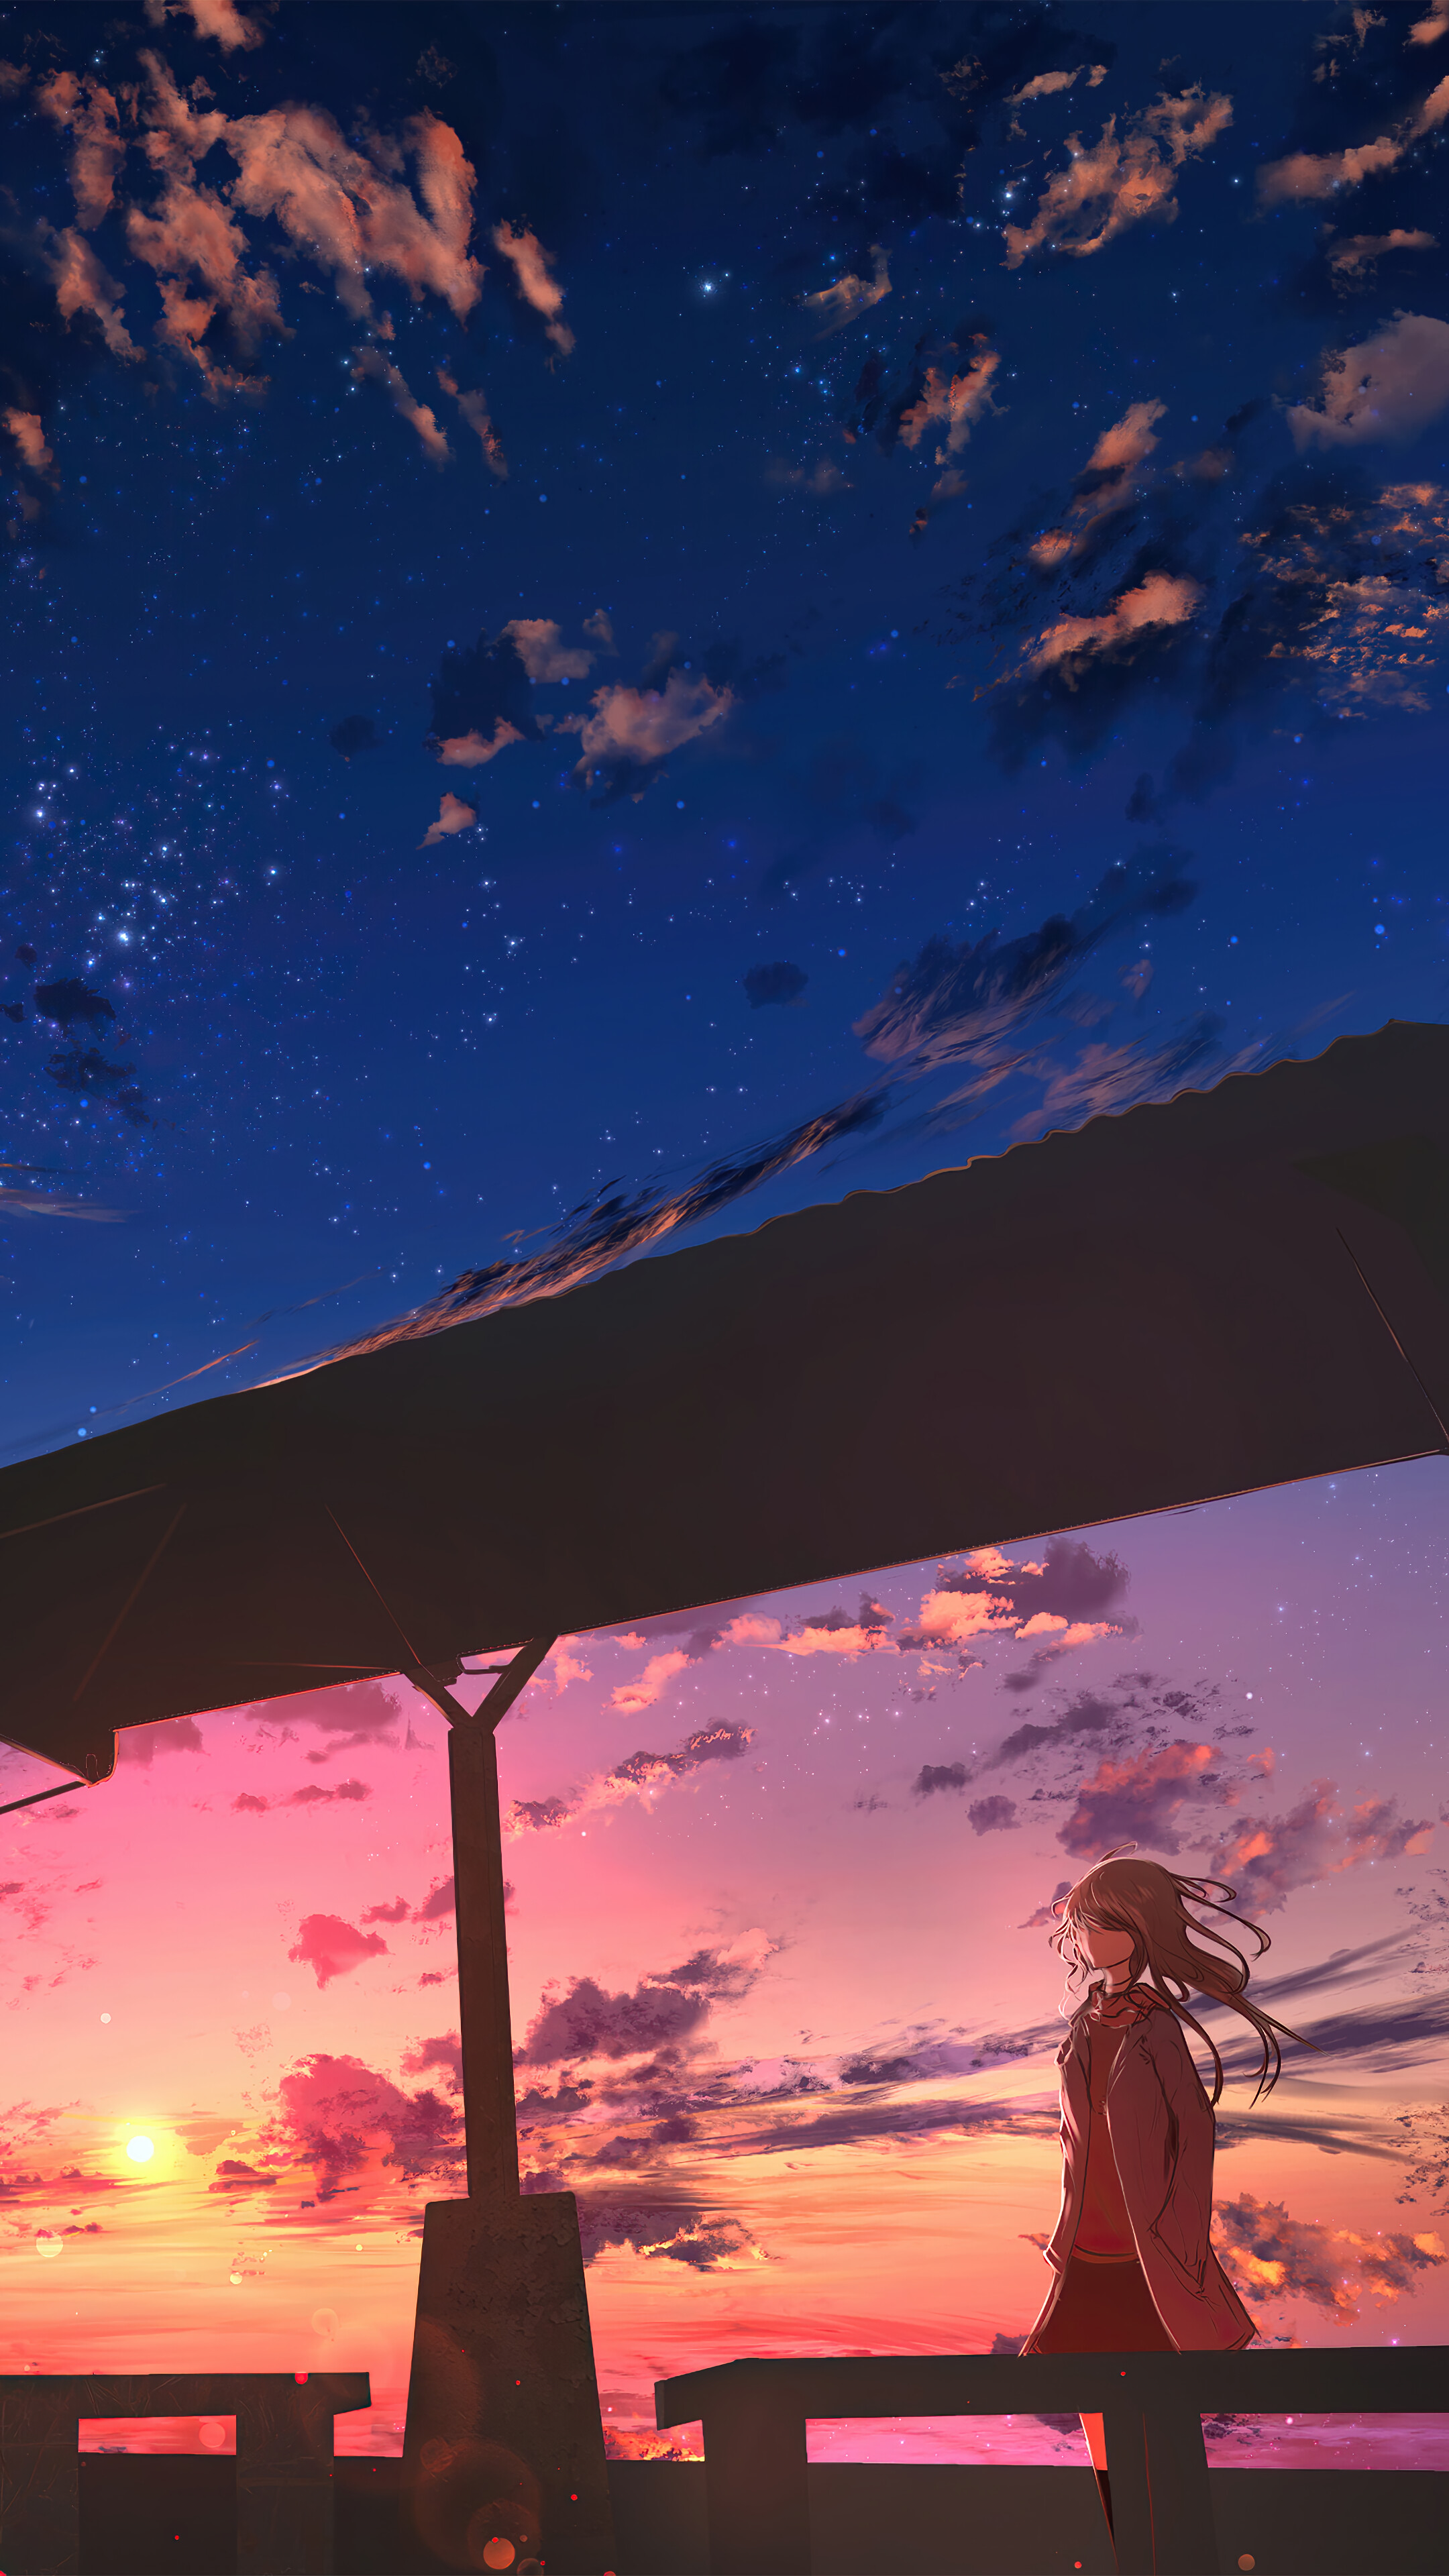 Anime 4k Wallpapers - Top Ultar 4k Anime Backgrounds Download